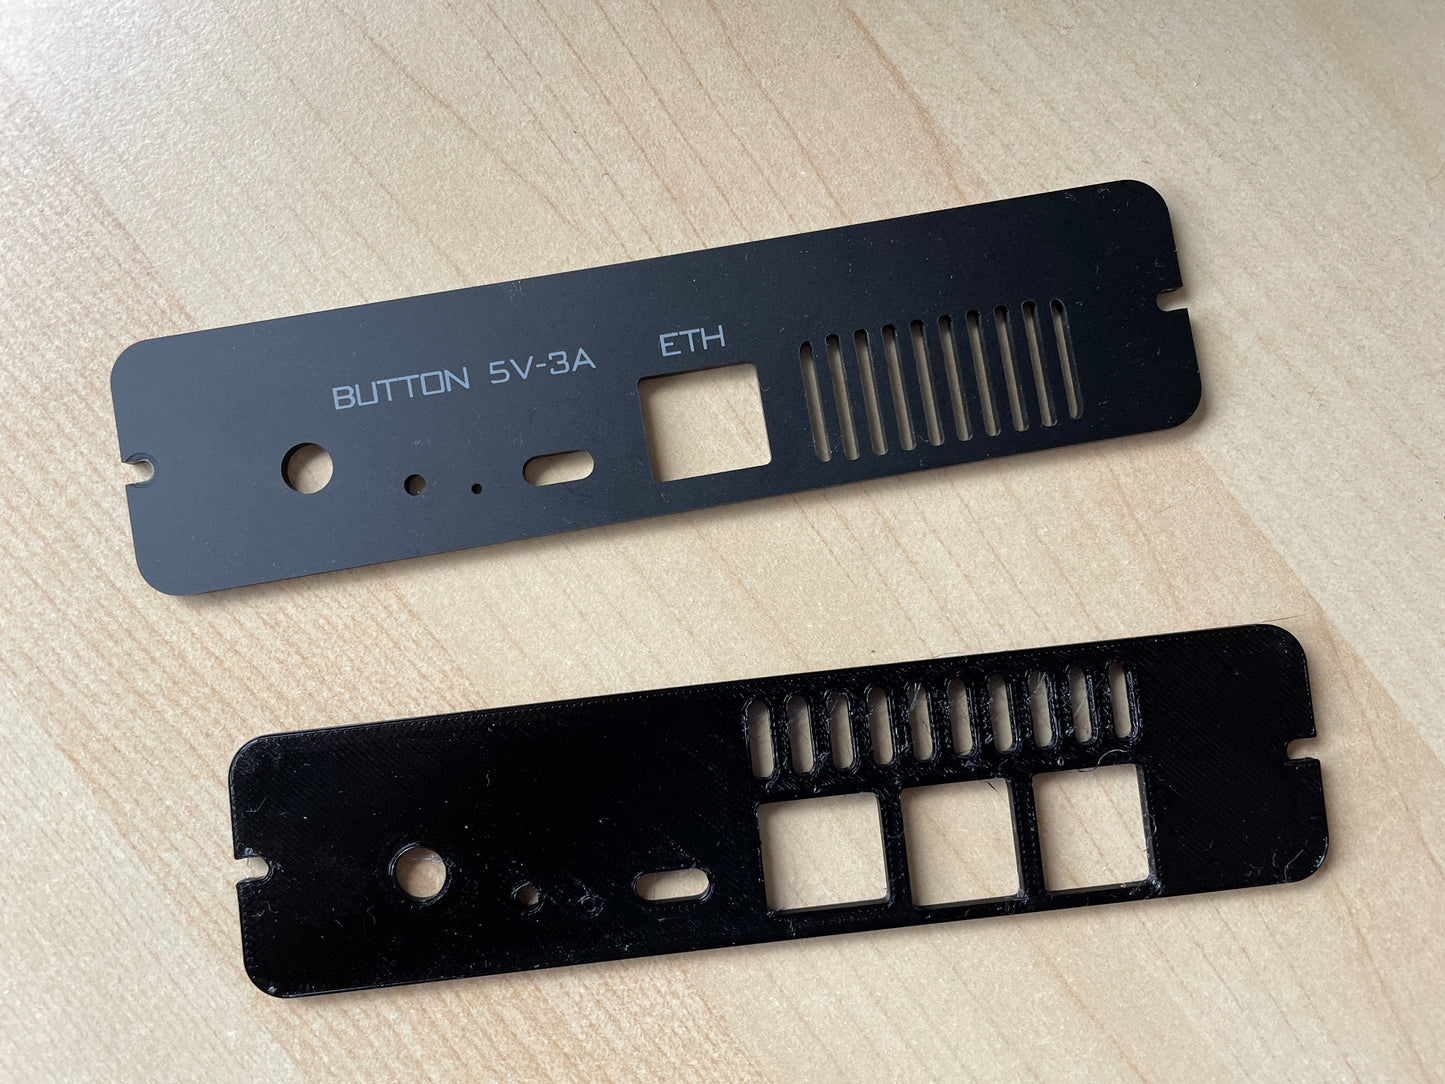 SenseCap M1 - Backing plate - exposes USB ports - Free shipping